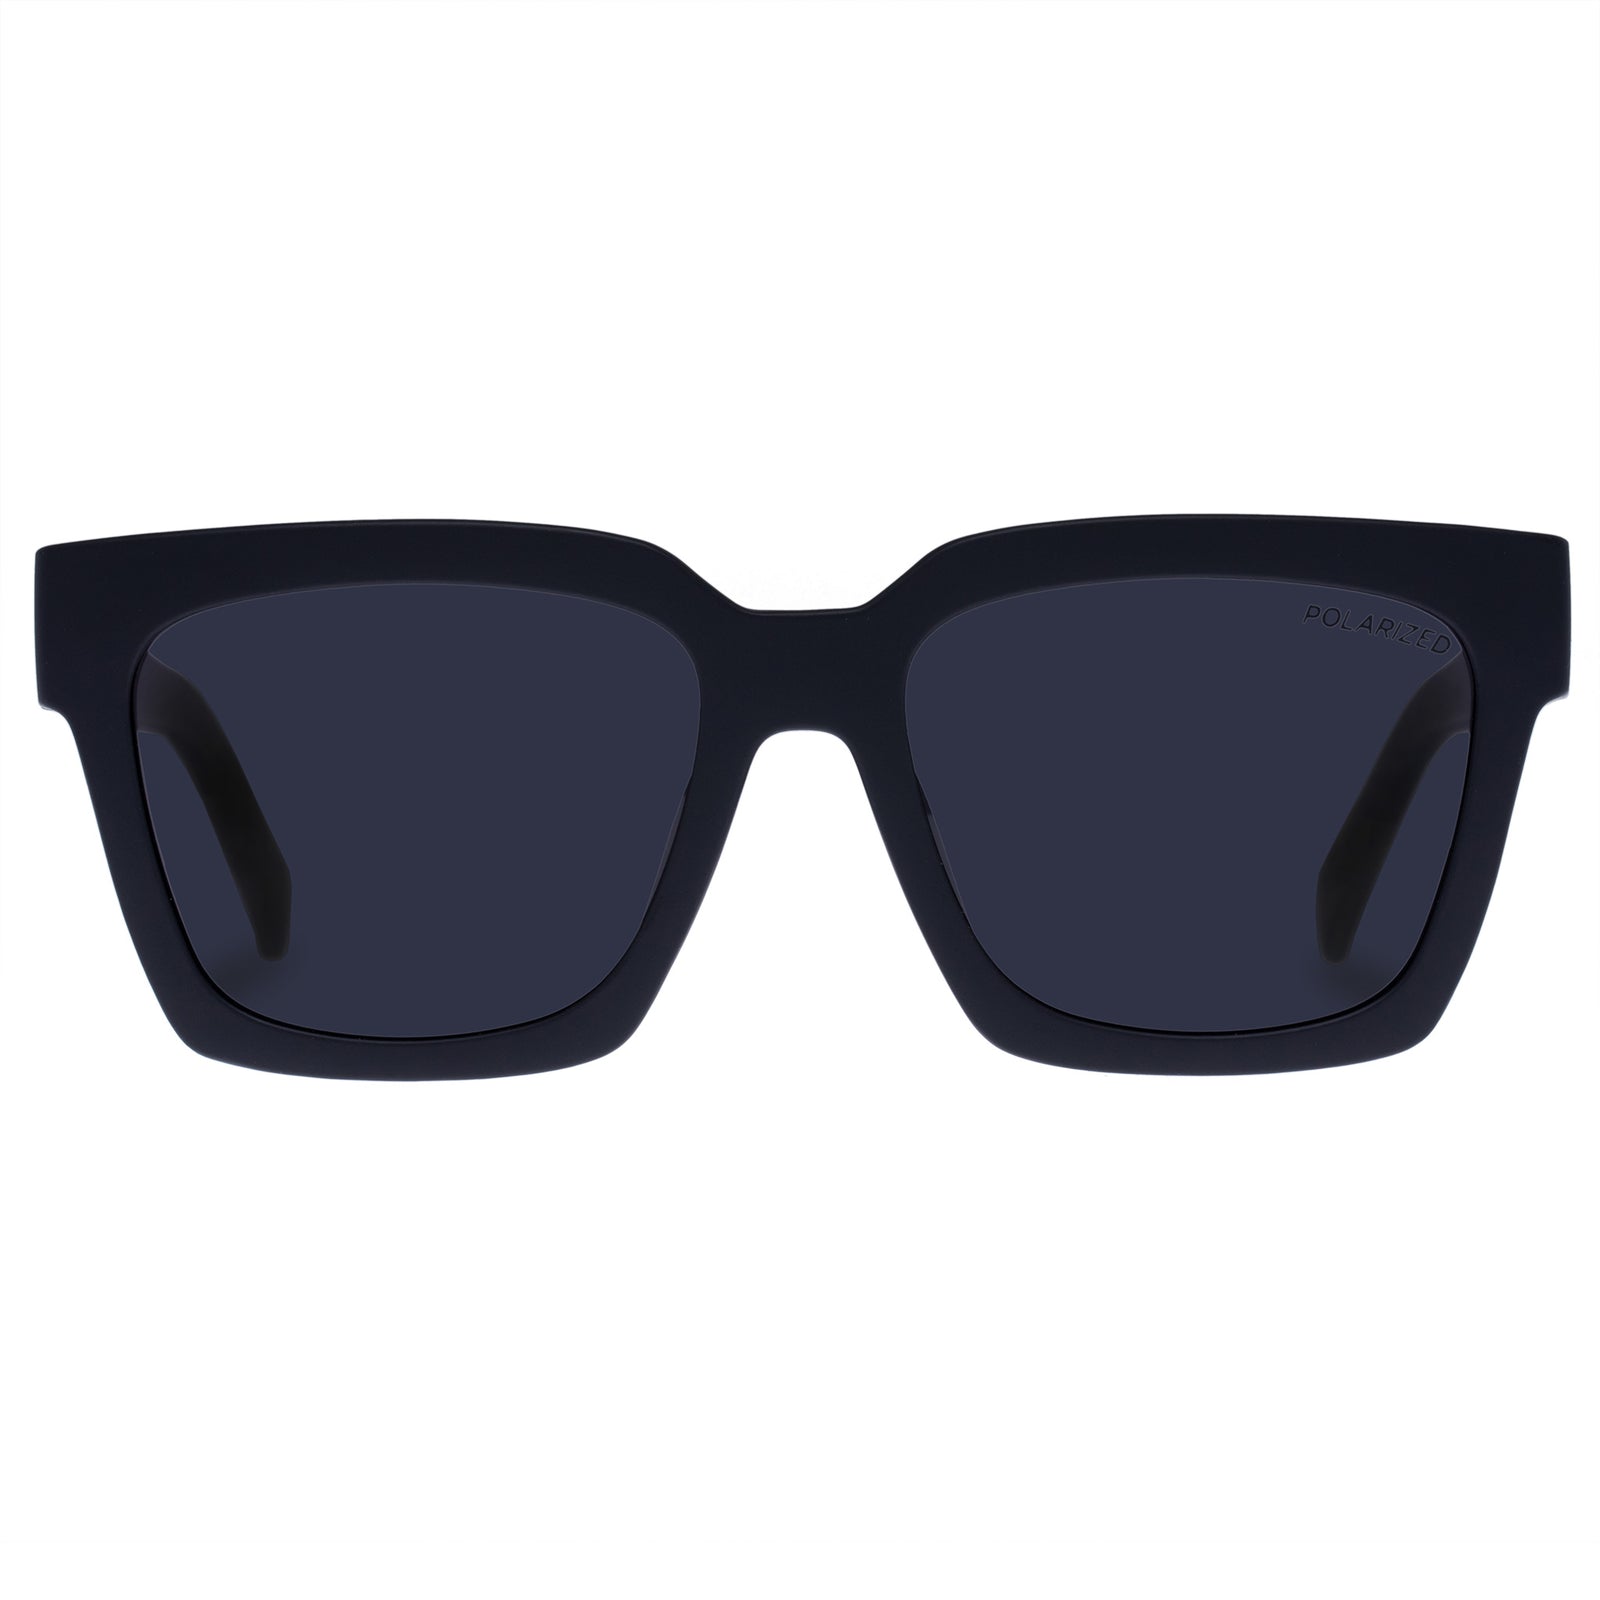 Alf Black Polarized Wayfarer Sunglasses S12B2198 @ ₹999